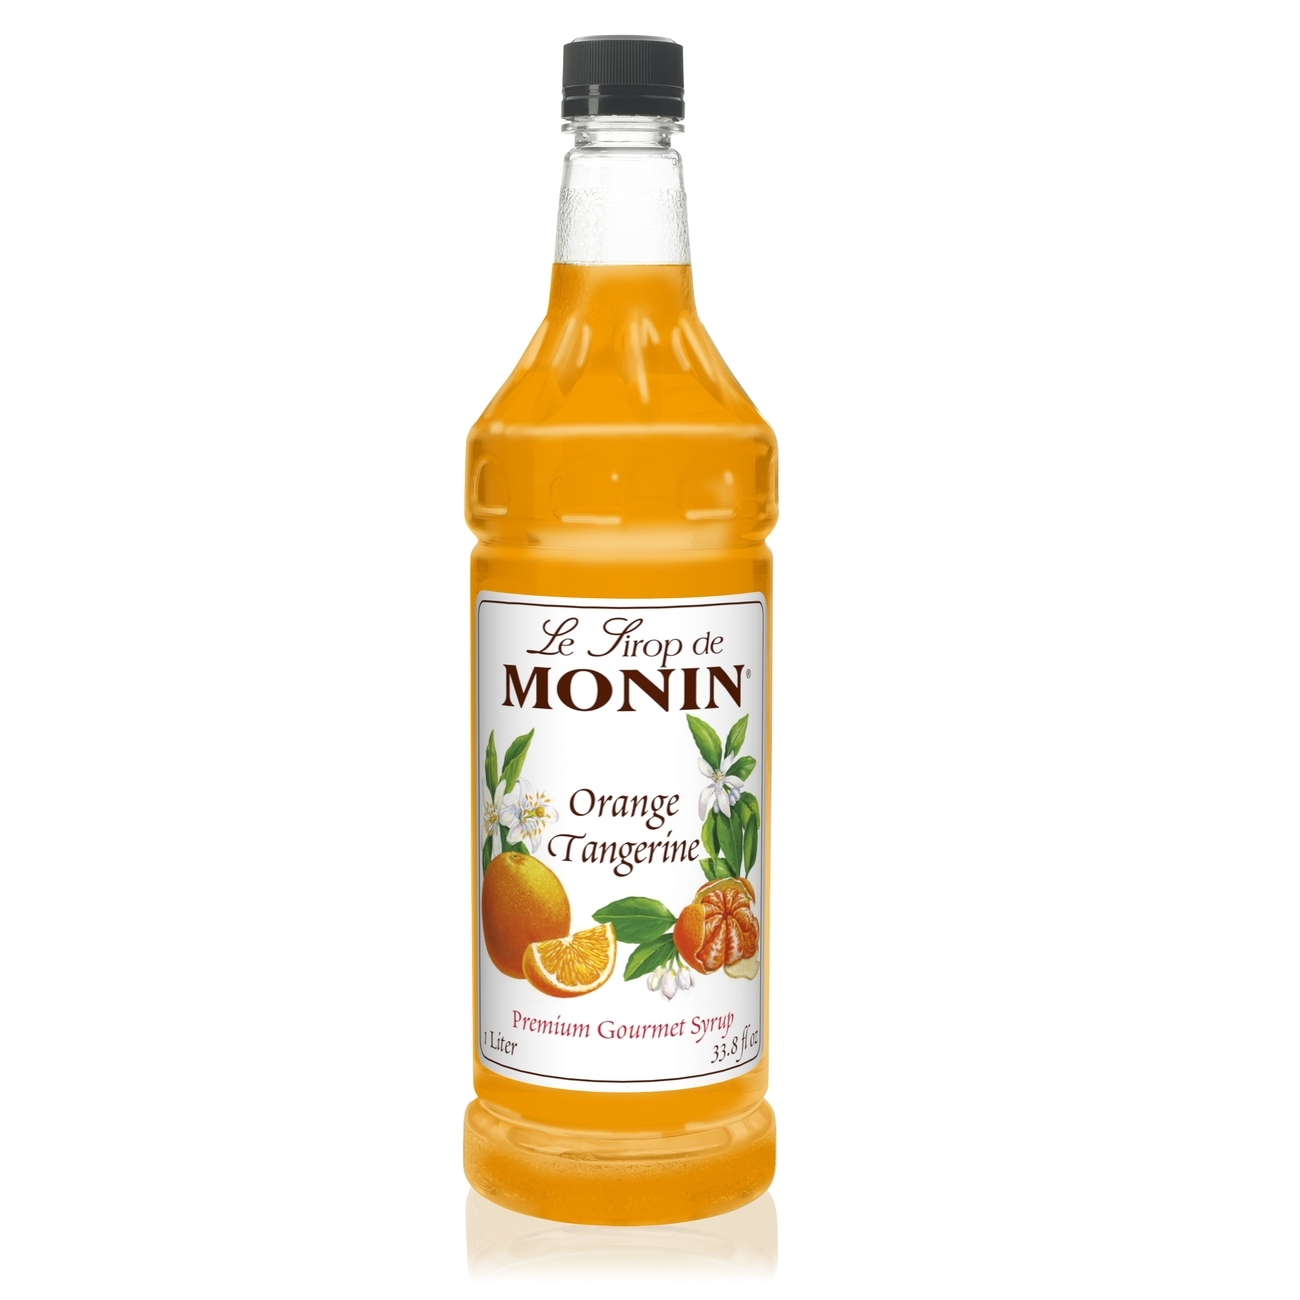 Monin Orange Tangerine Syrup